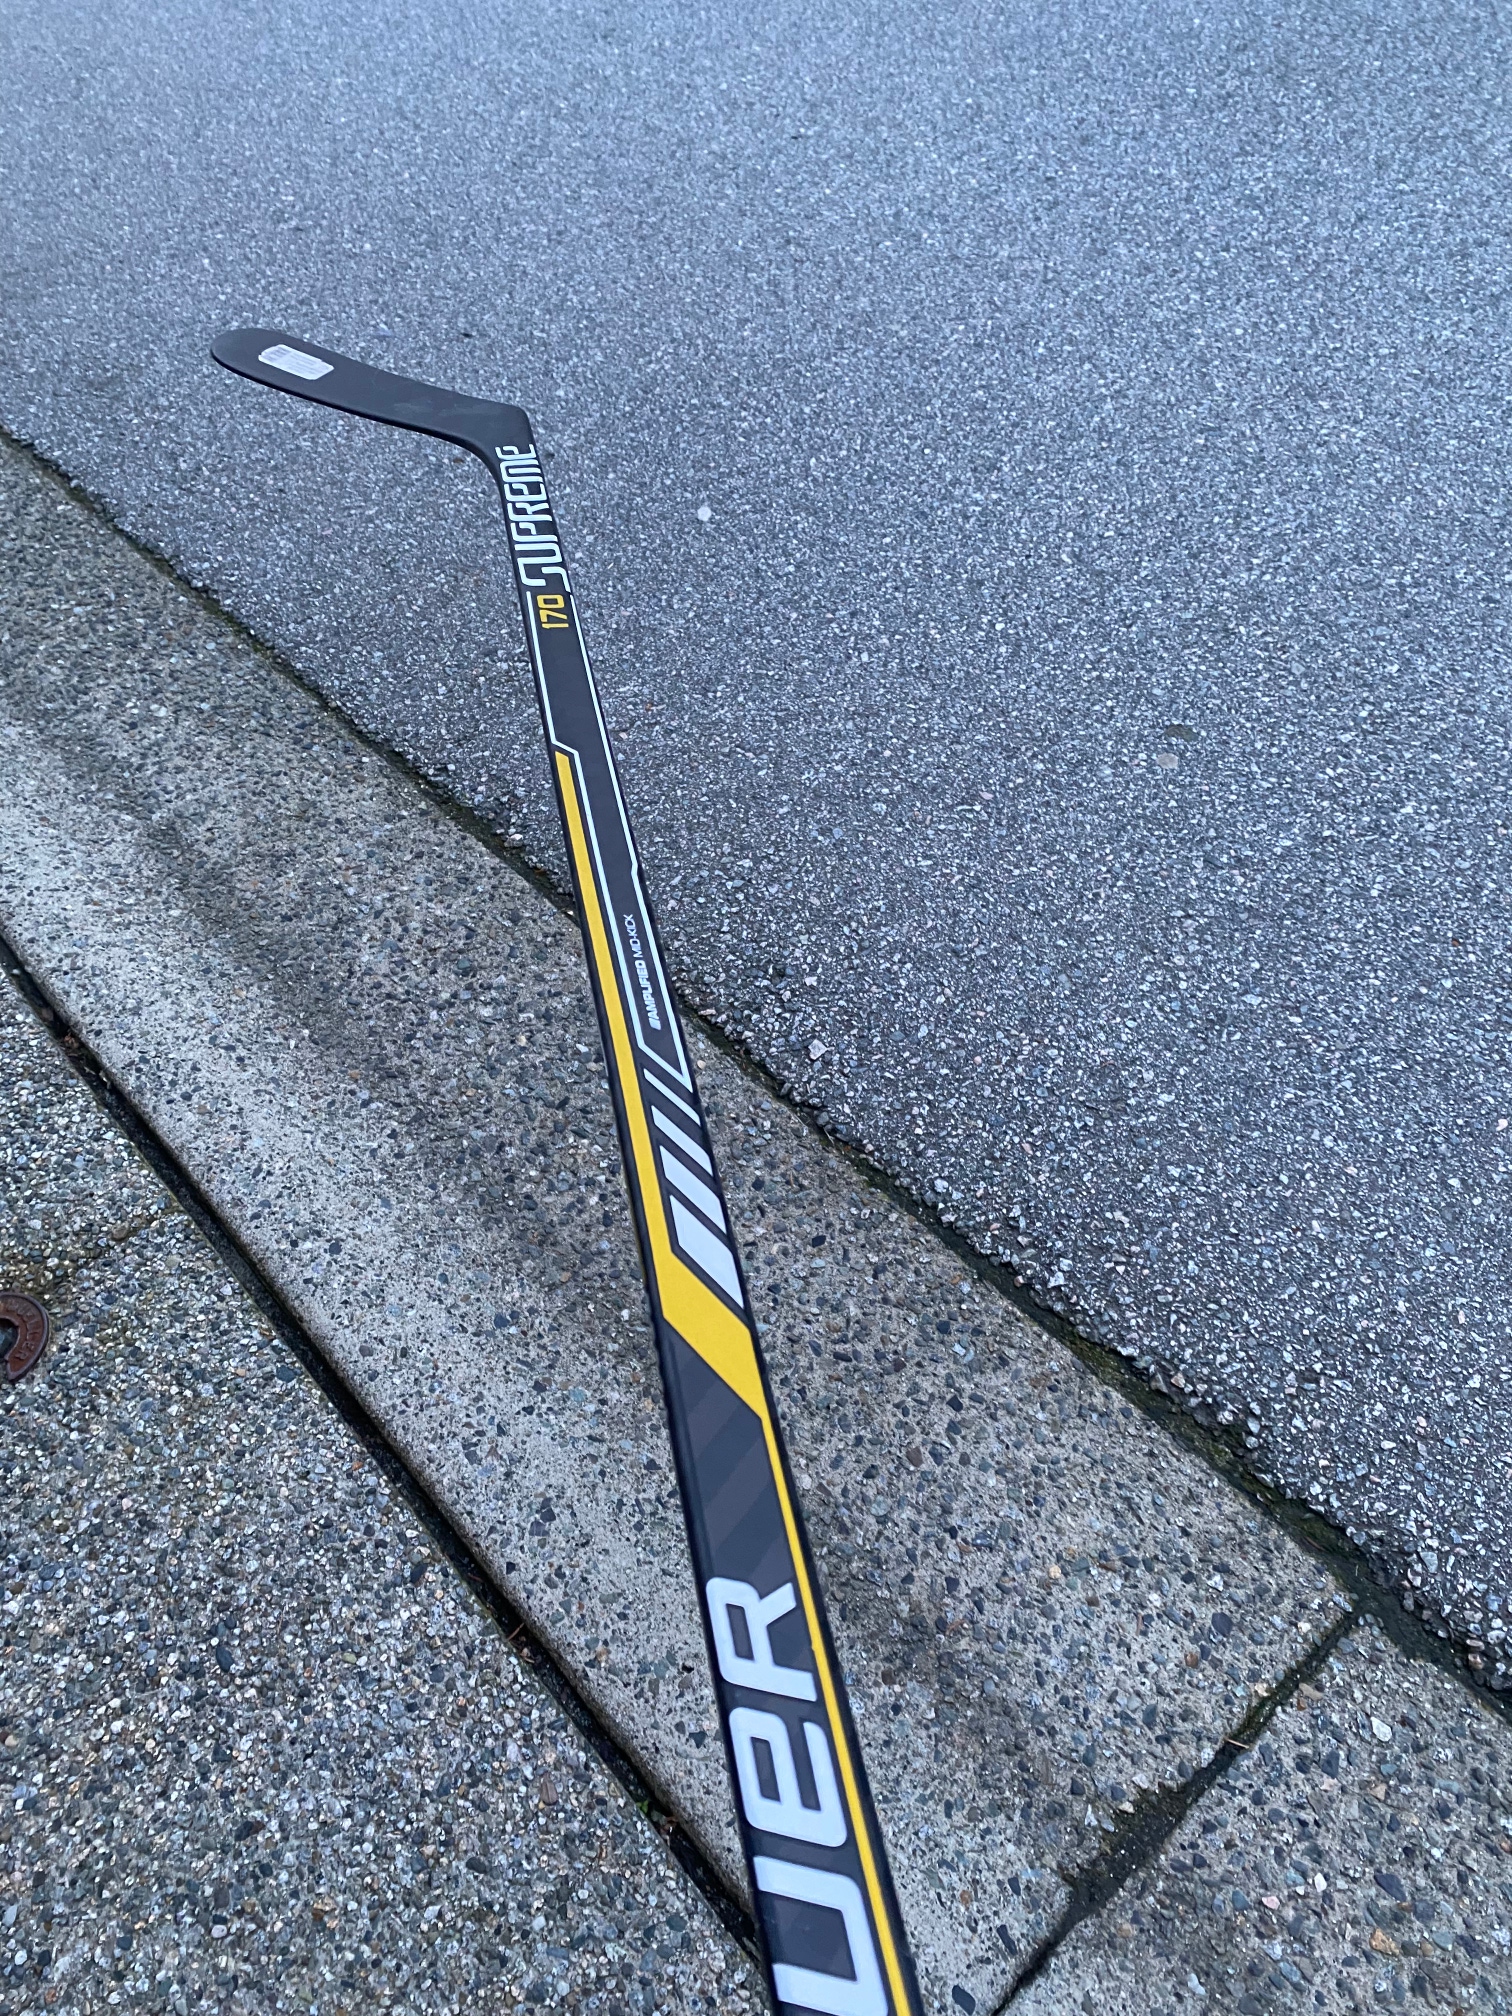 Like NEW Bauer Supreme S170 Hockey Stick (PM9/67 flex)